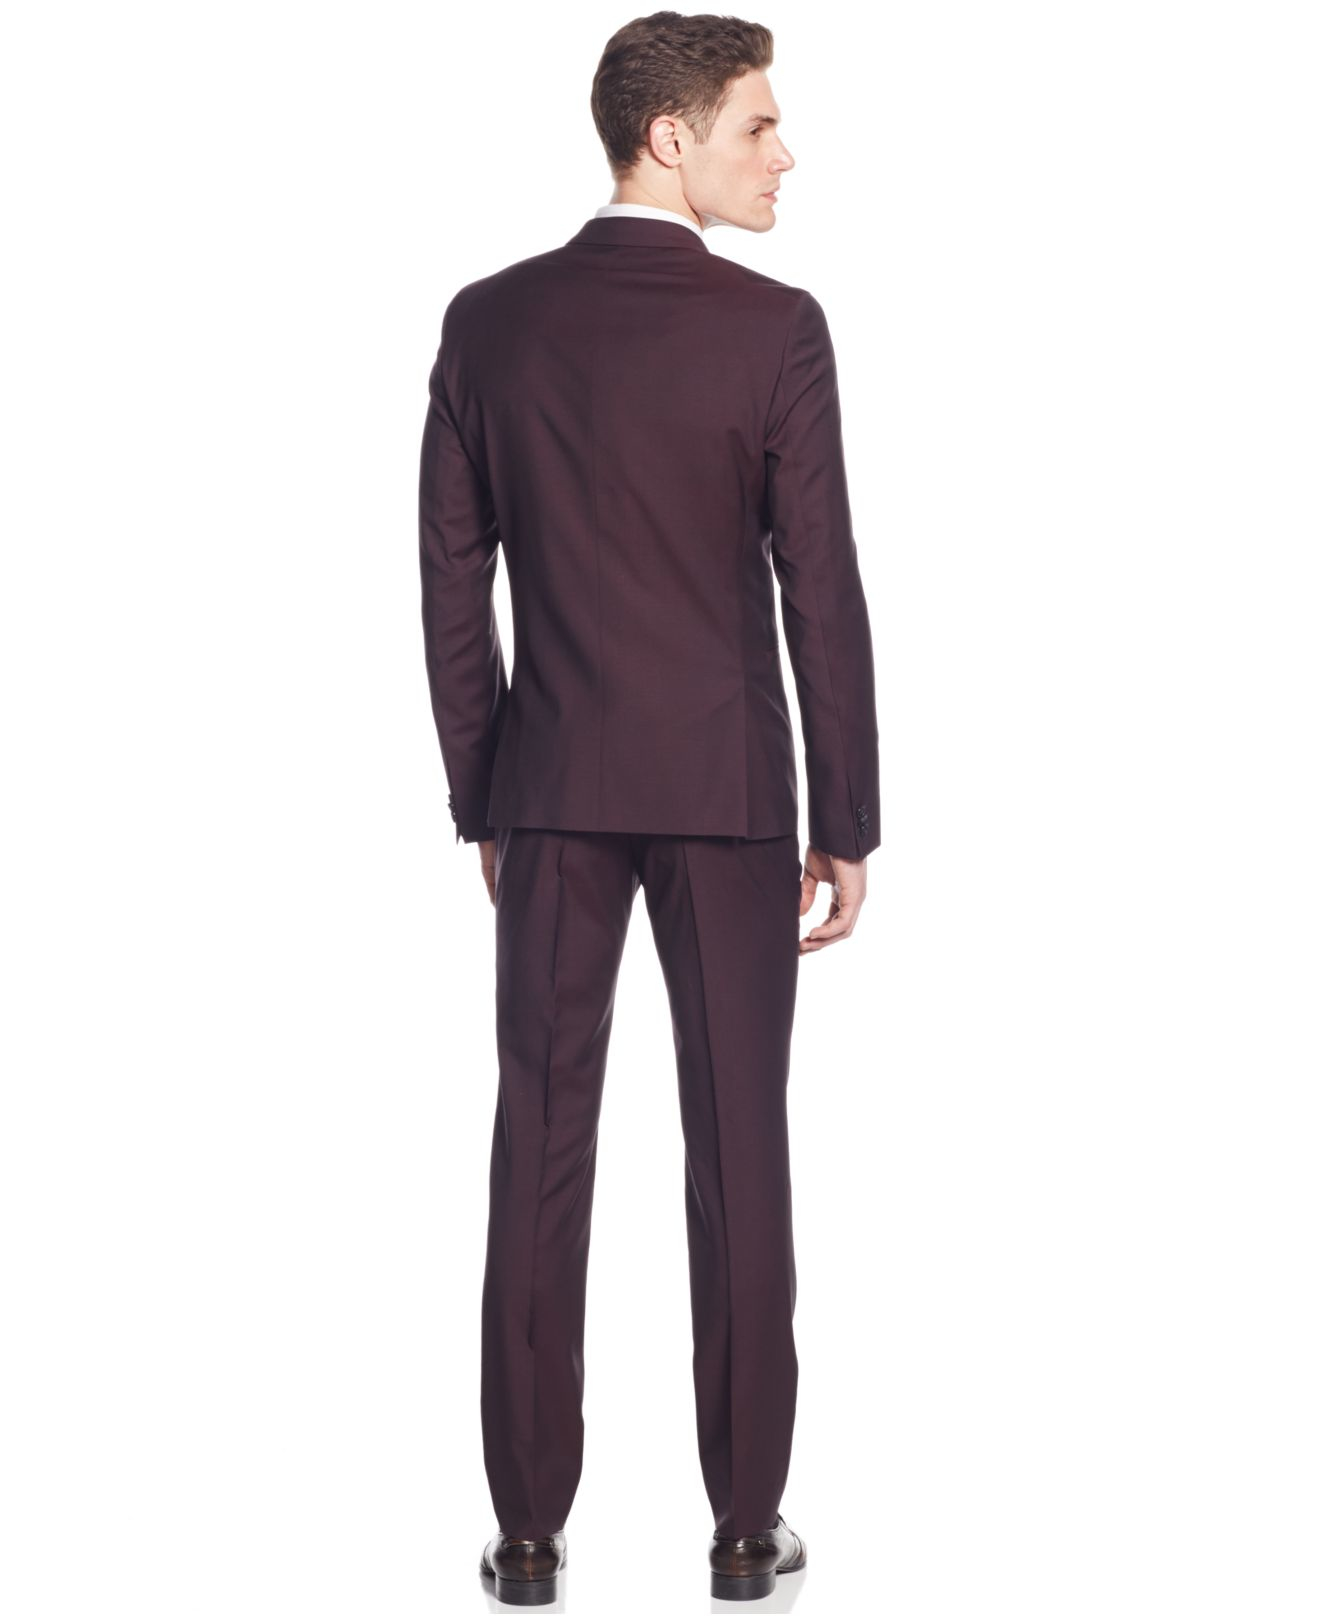 Lyst - Boss Hugo By Burgundy Slim-fit Suit in Purple for Men